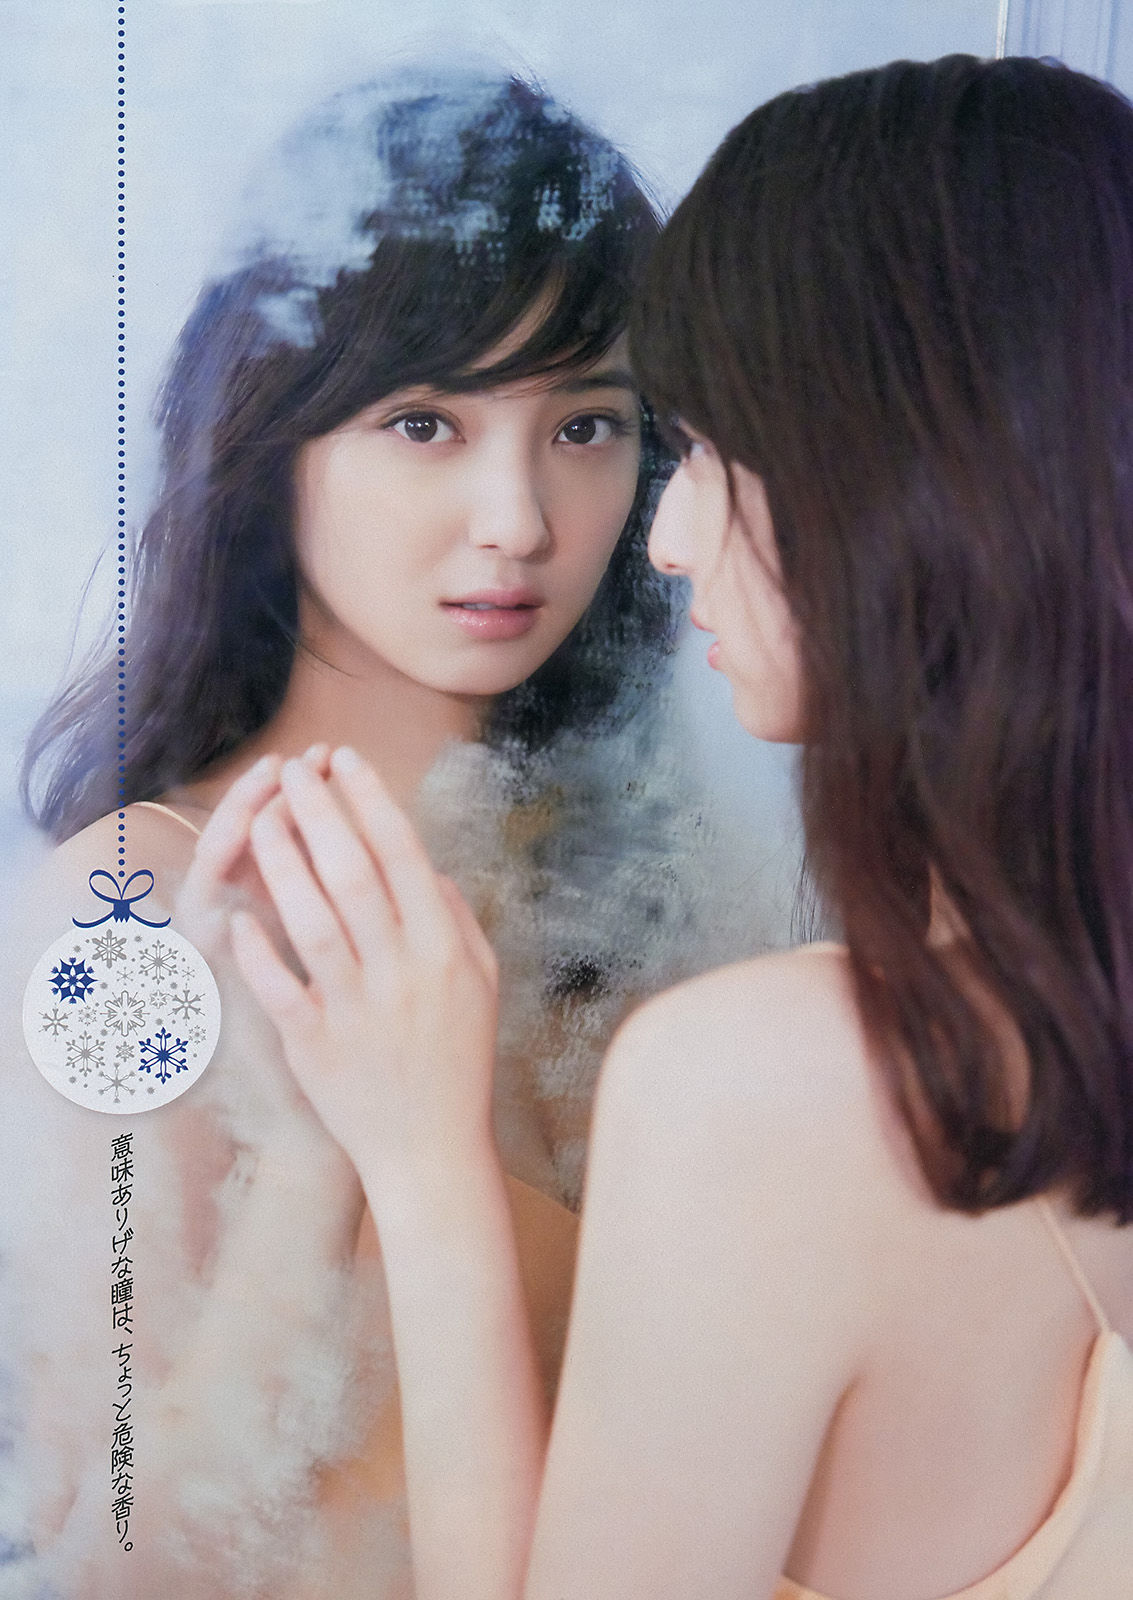 [Young Magazine]气质女神:佐佐木希(佐々木希)高品质壁纸图片珍藏版(13P)